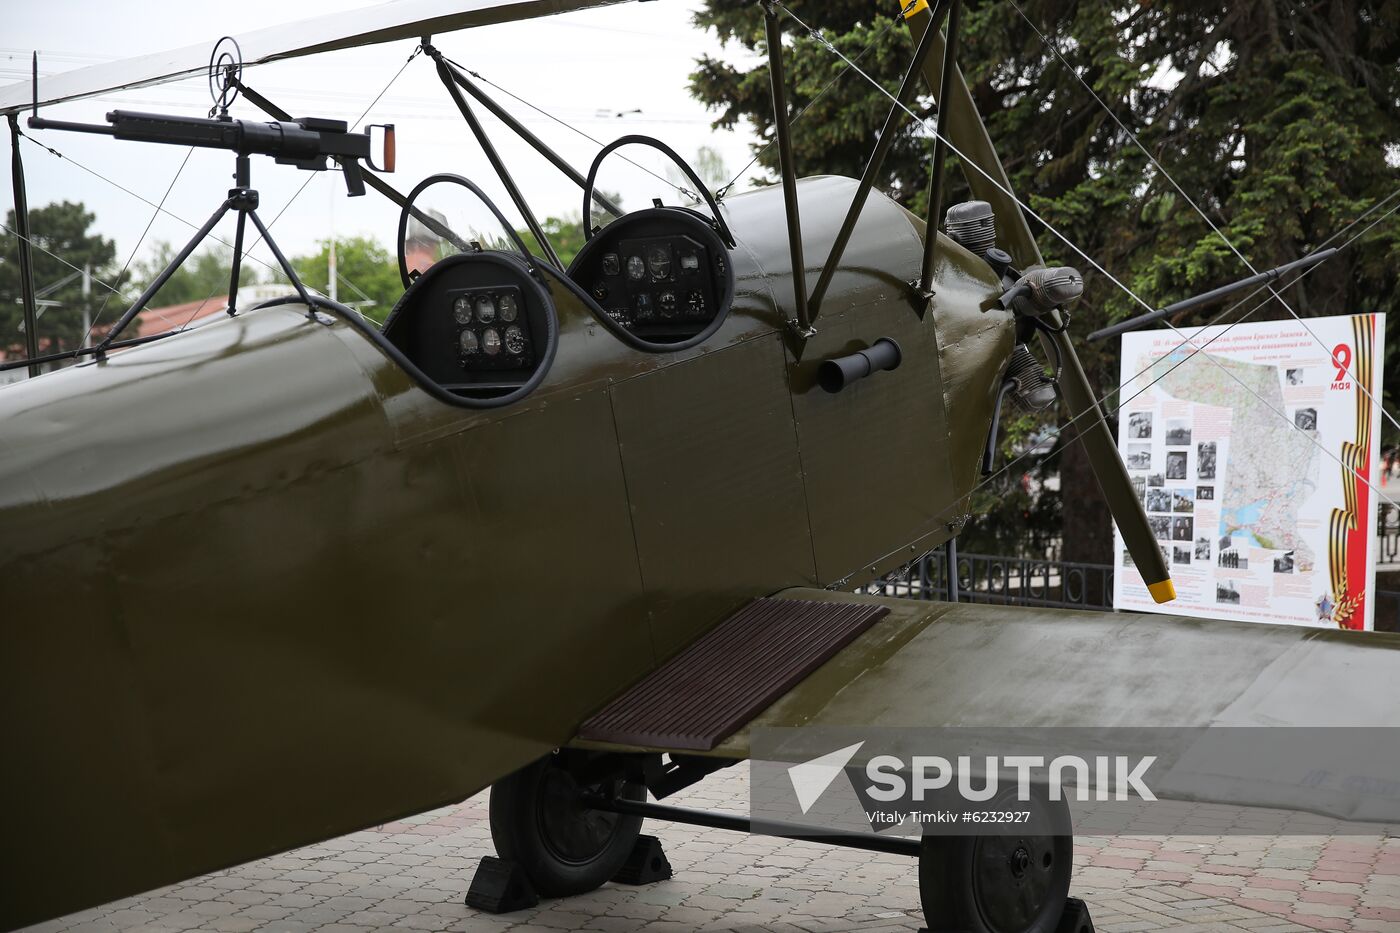 Replica of Polikarpov Po-2 aircraft erected in Krasnodar airport